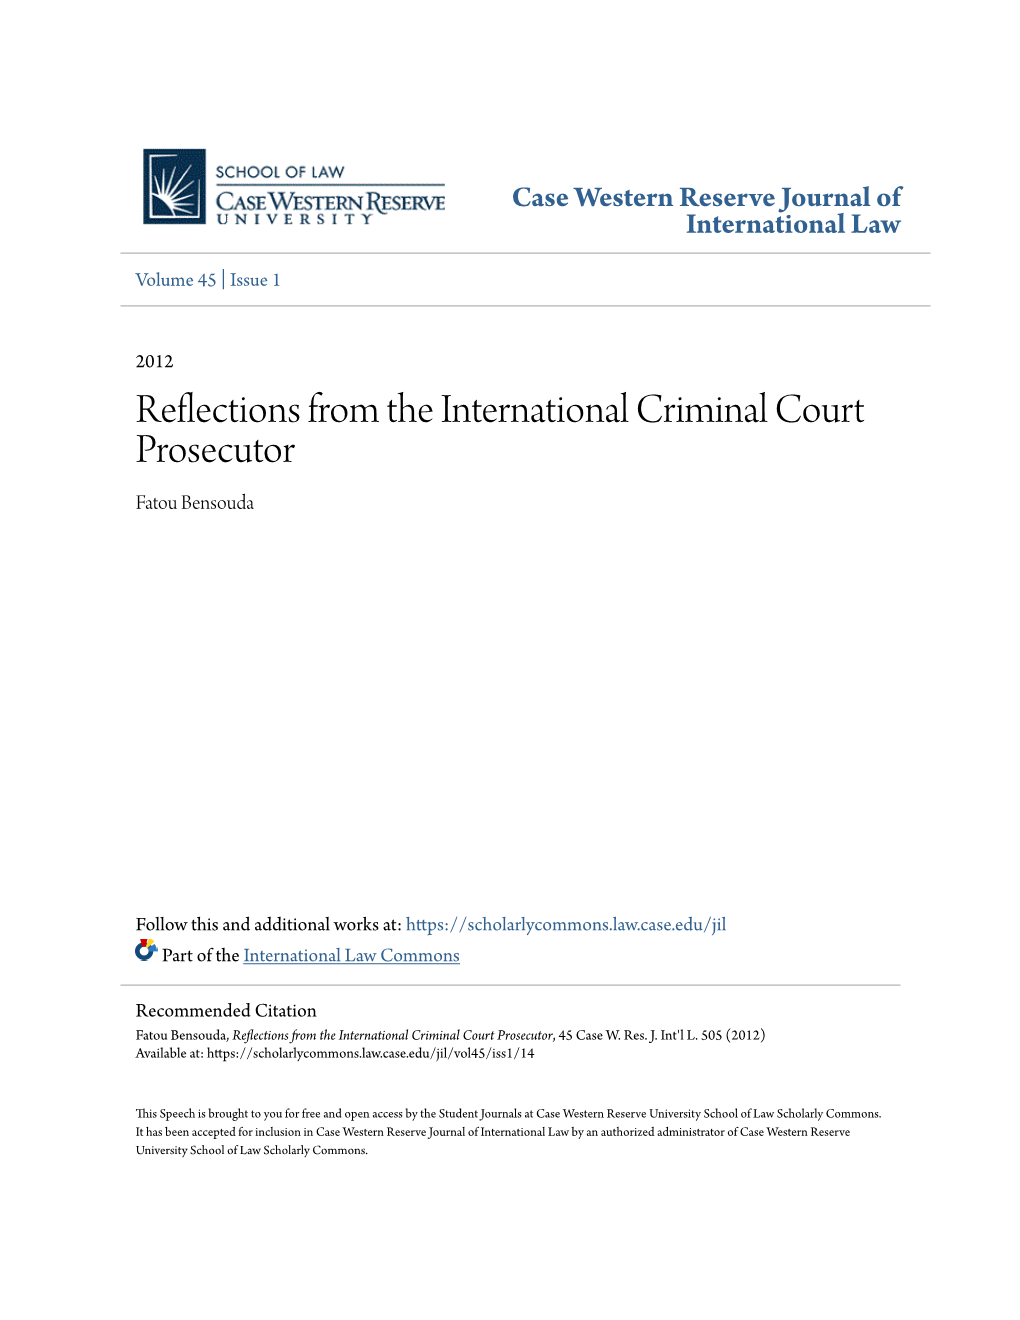 Reflections from the International Criminal Court Prosecutor Fatou Bensouda